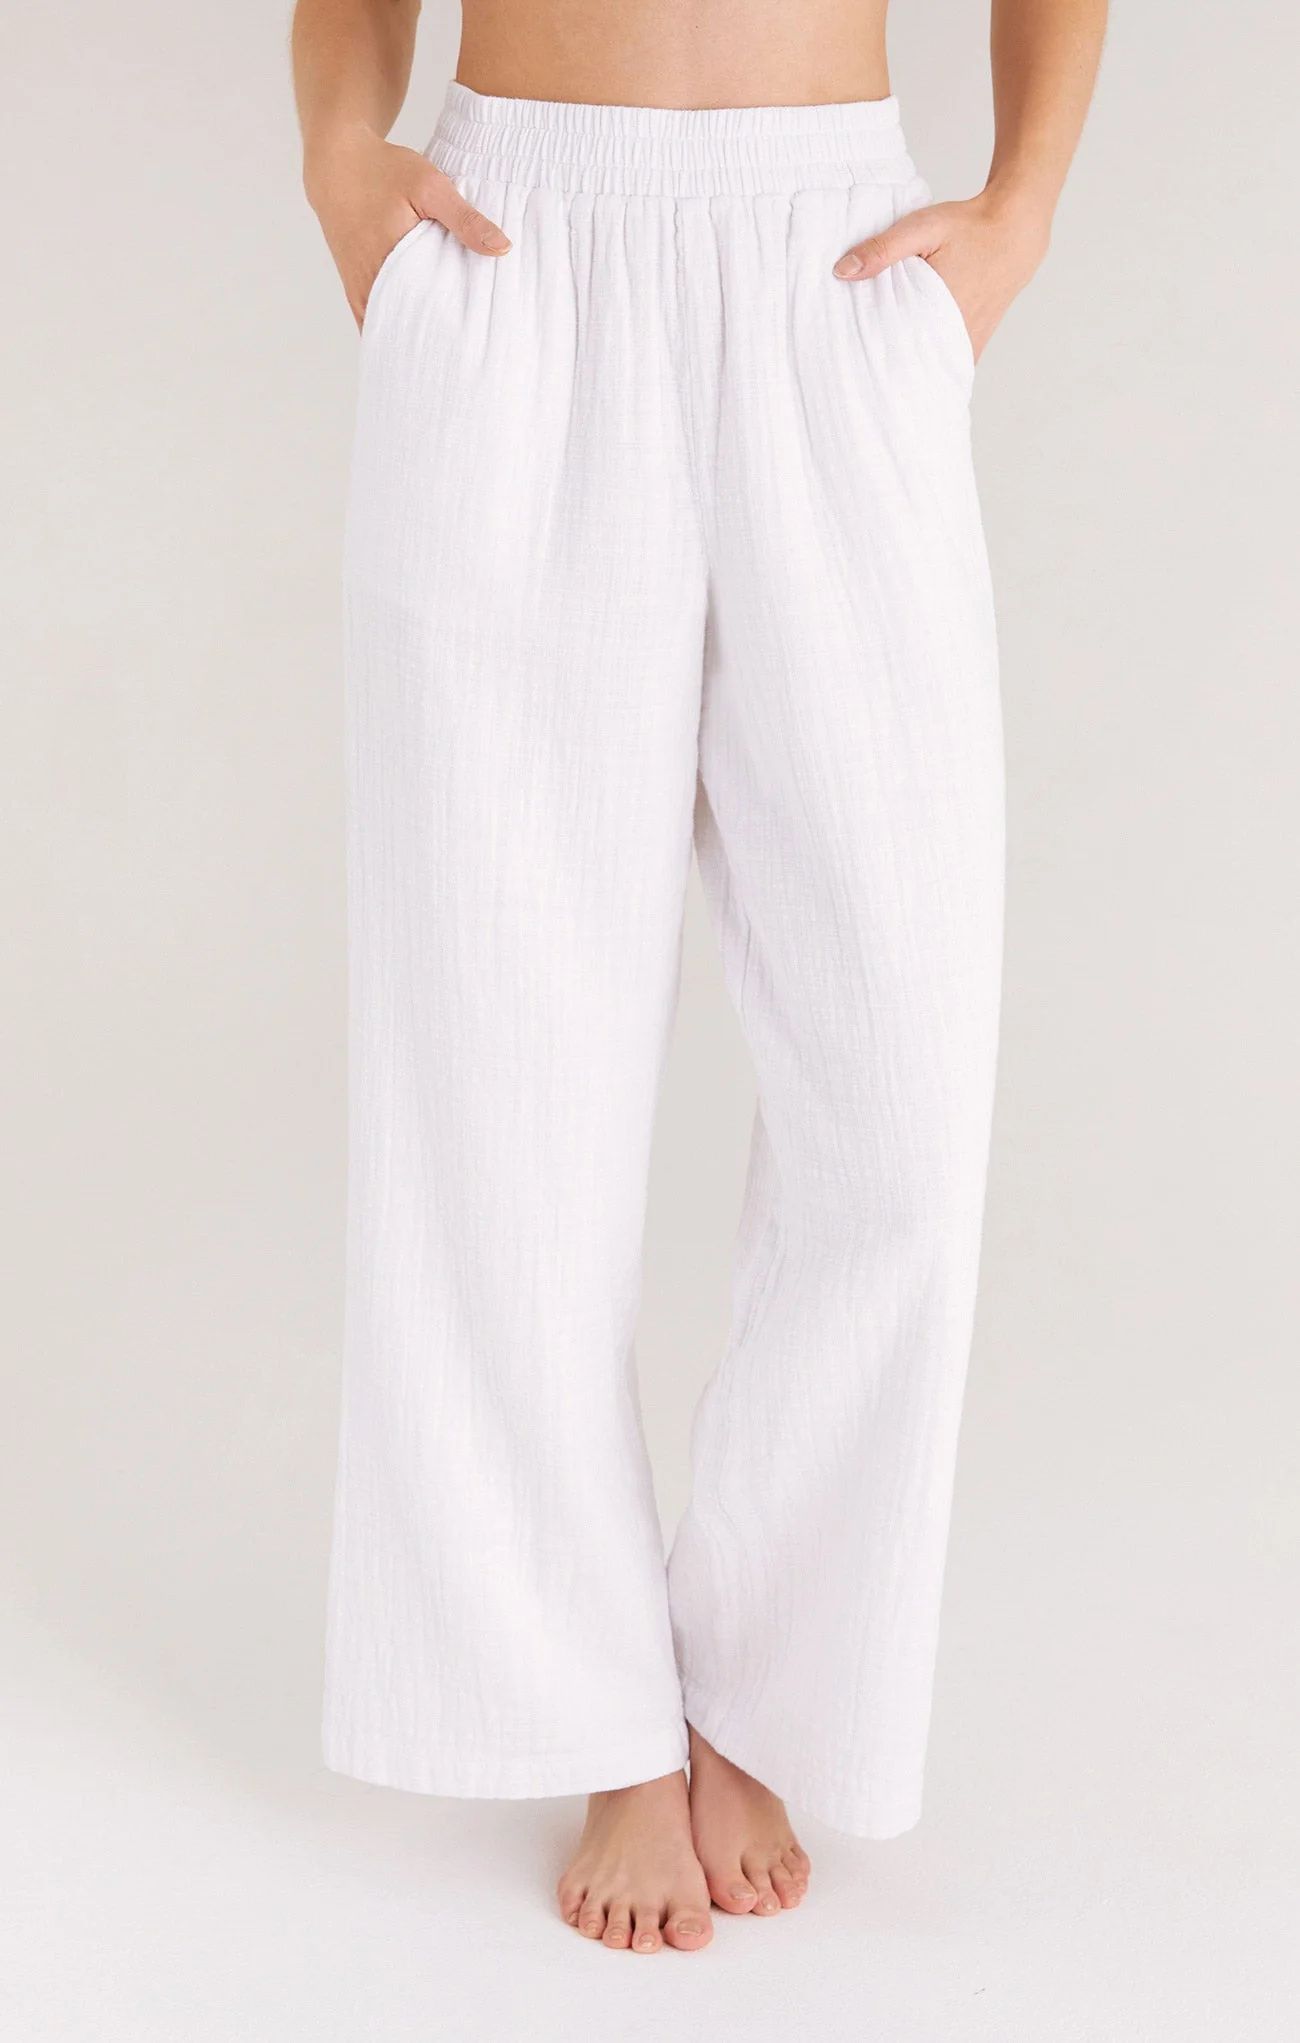 Z SUPPLY Lounge Women's Boardwalk Gauze Pant, White, Medium, 100% Cotton | Z Supply